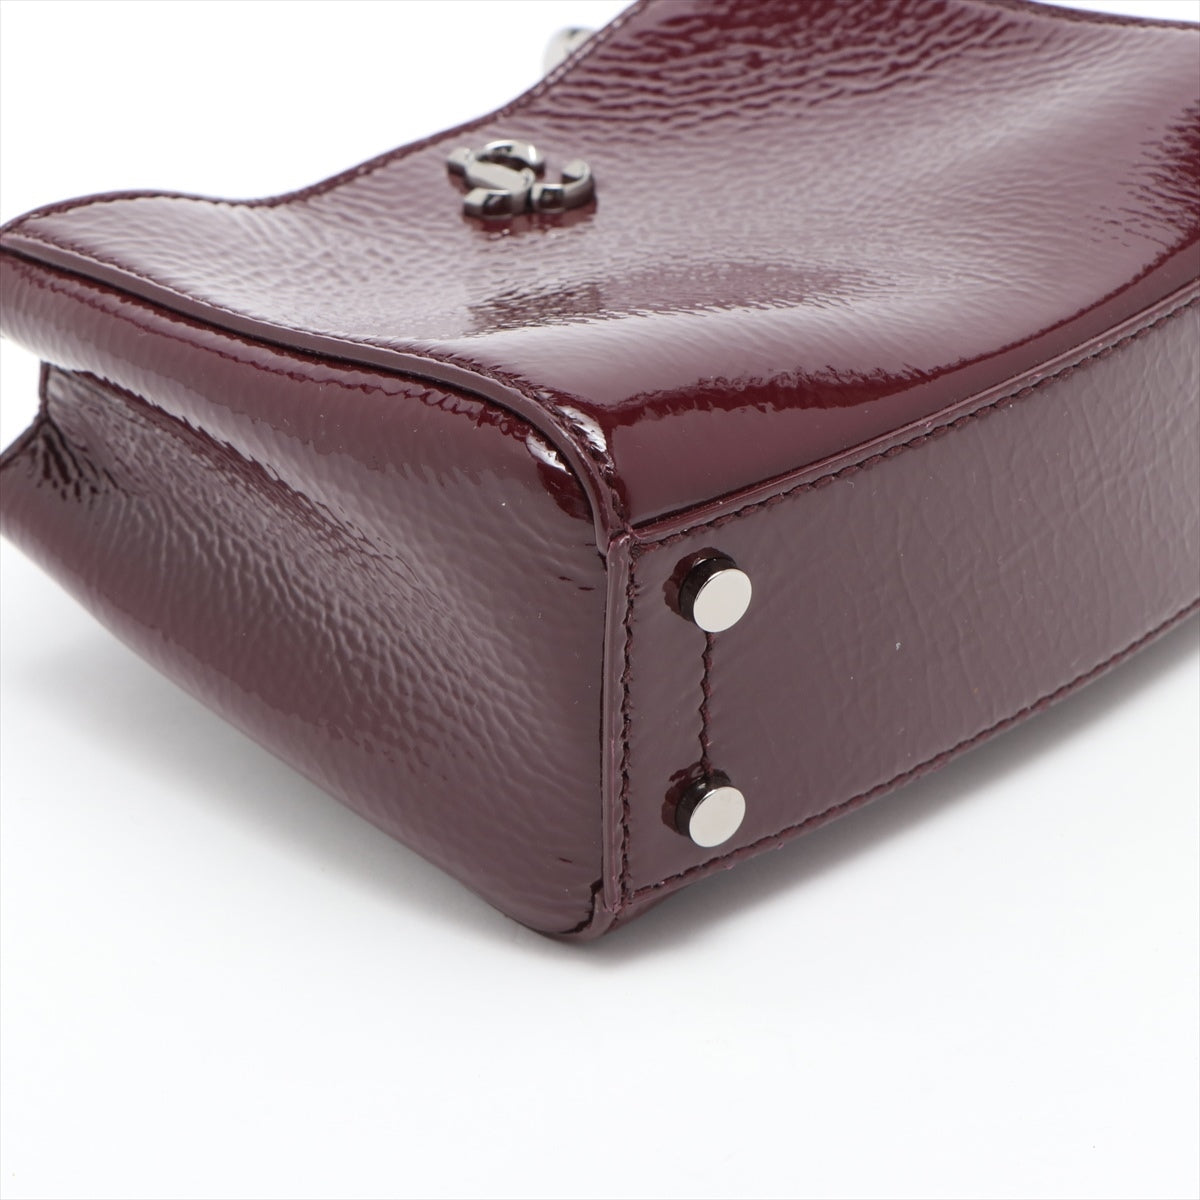 Jimmy Choo Varennes Patent leather 2way shoulder bag Bordeaux